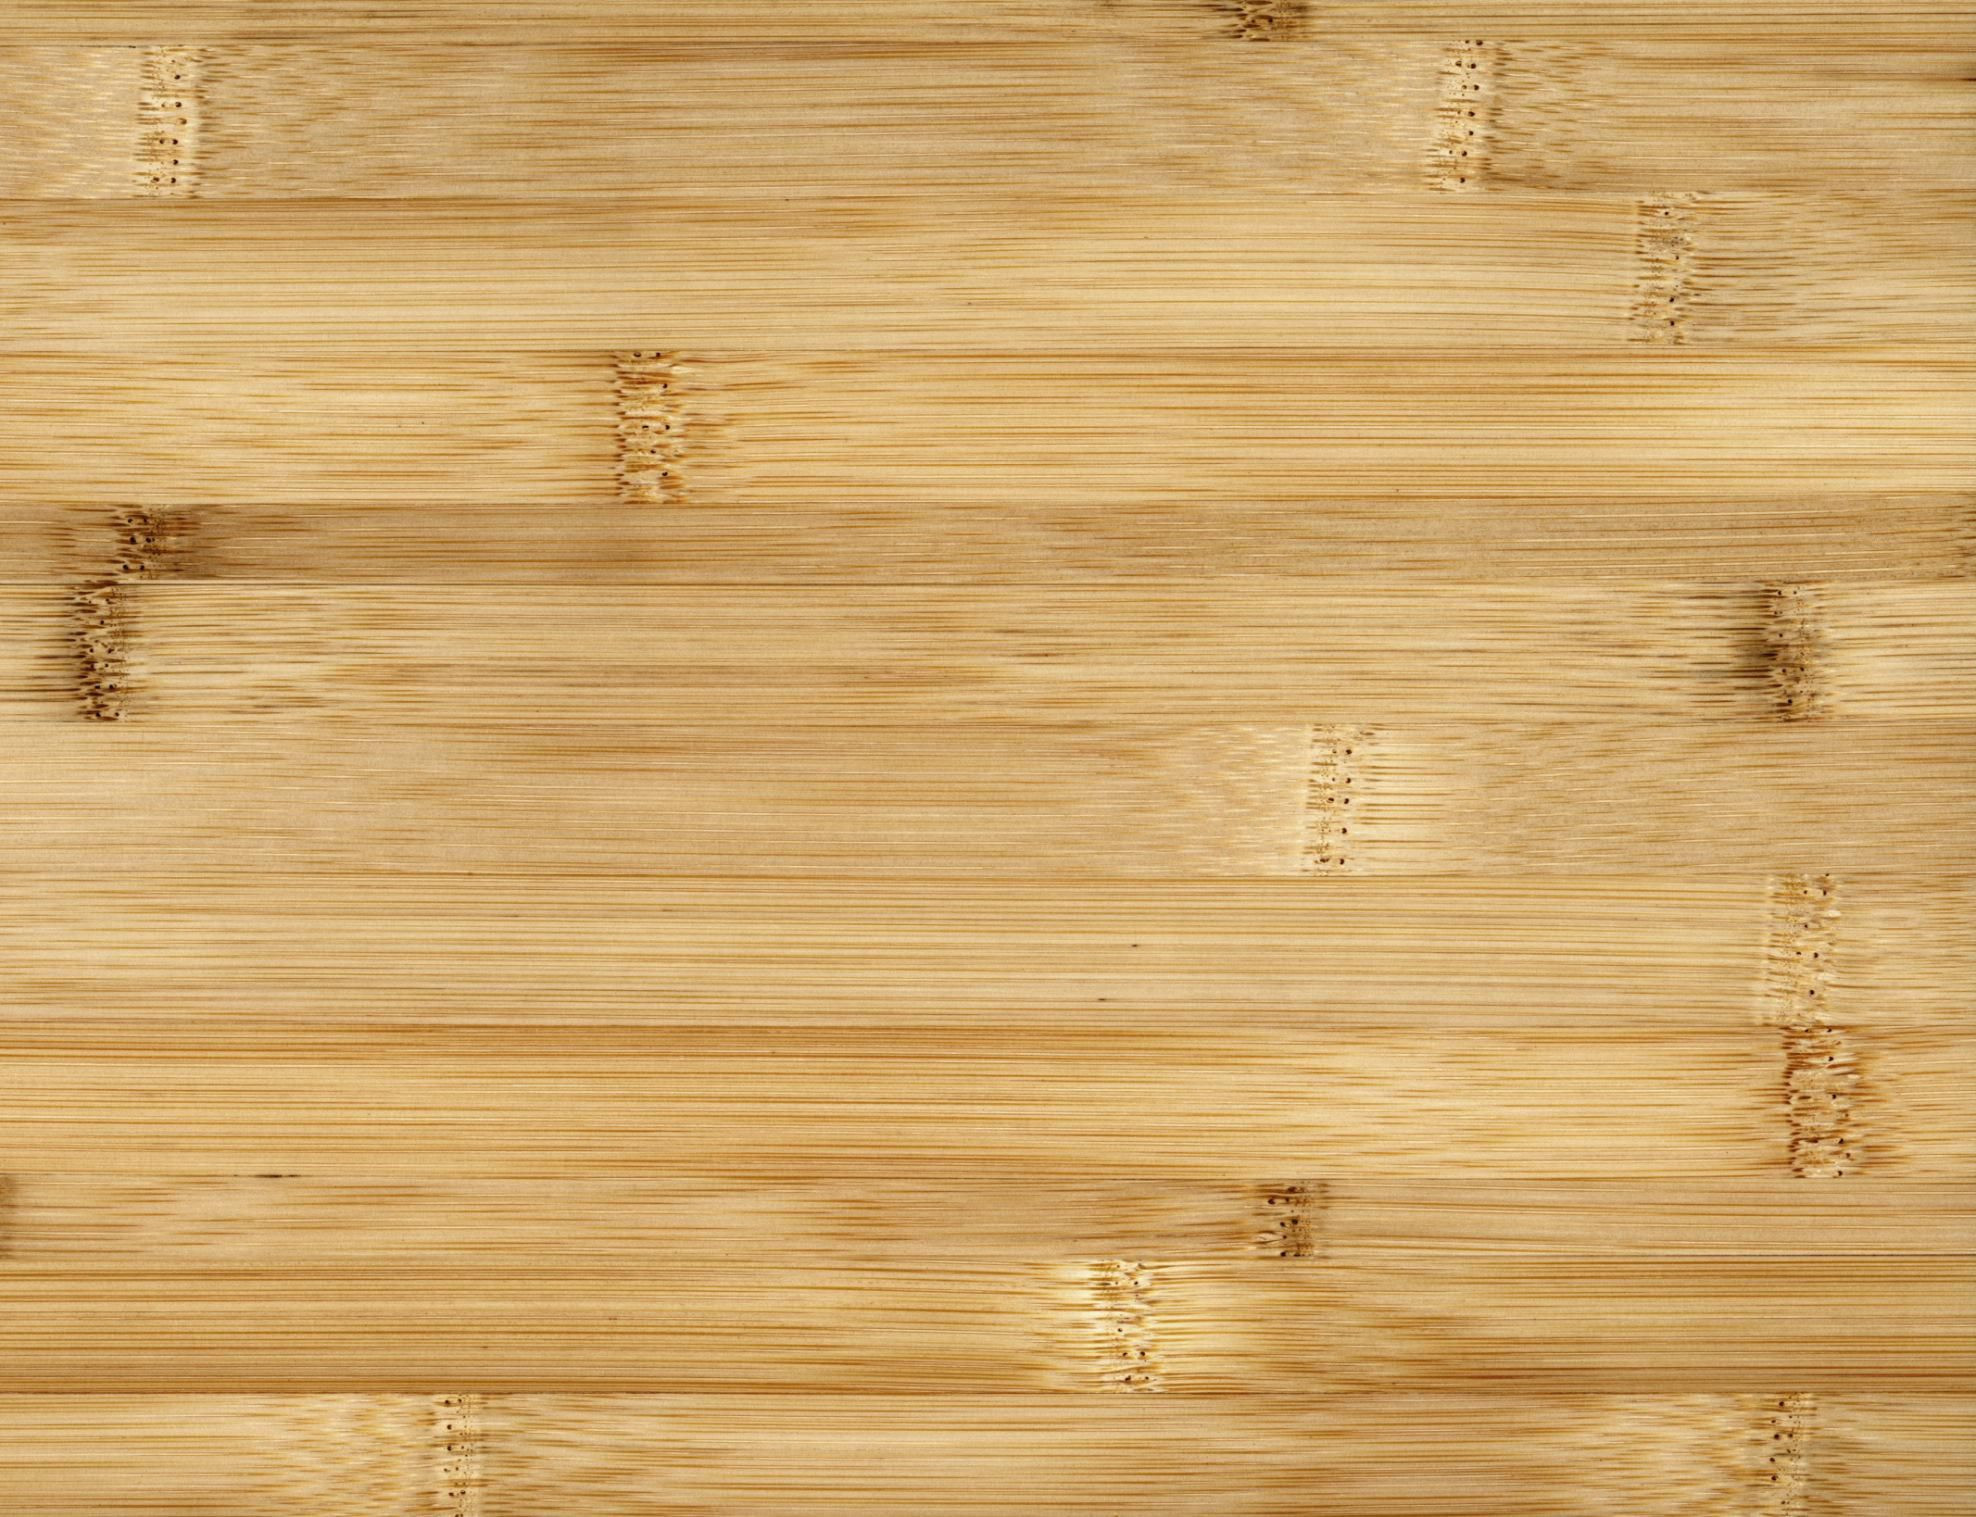 24 Spectacular Apple Cider Vinegar to Clean Hardwood Floors 2024 free download apple cider vinegar to clean hardwood floors of how to clean bamboo flooring inside 200266305 001 56a2fd815f9b58b7d0d000cd